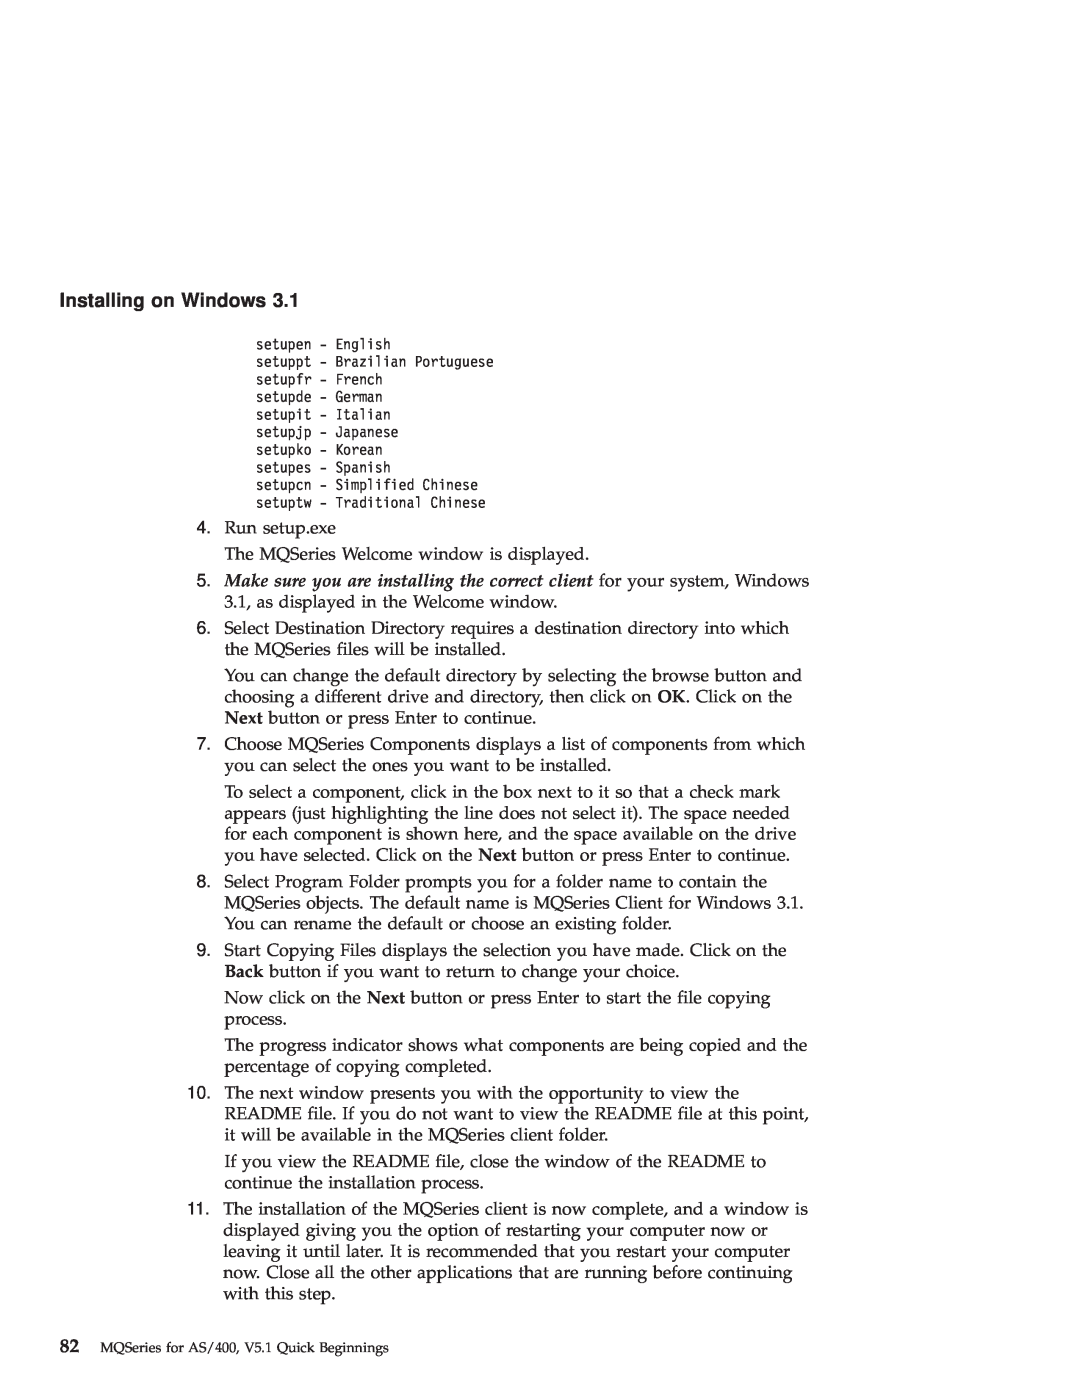 IBM GC34-5557-00 manual Installing on Windows, setupen - English setuppt - Brazilian Portuguese setupfr - French 